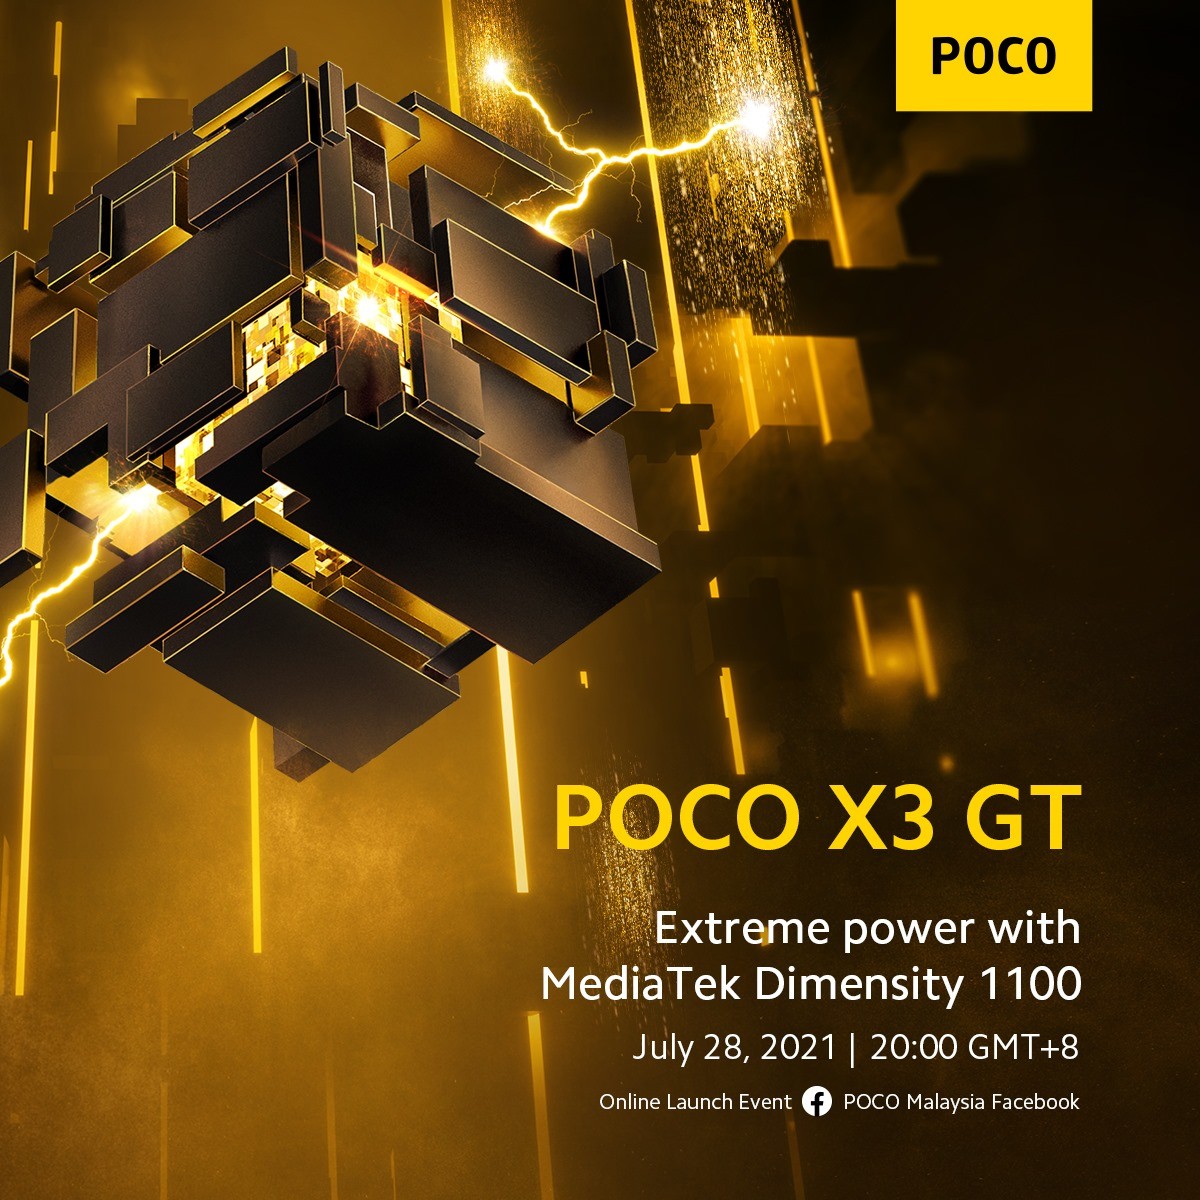 Poco X3 GT’s design confirmed through renders, Dimensity 1100 also verified